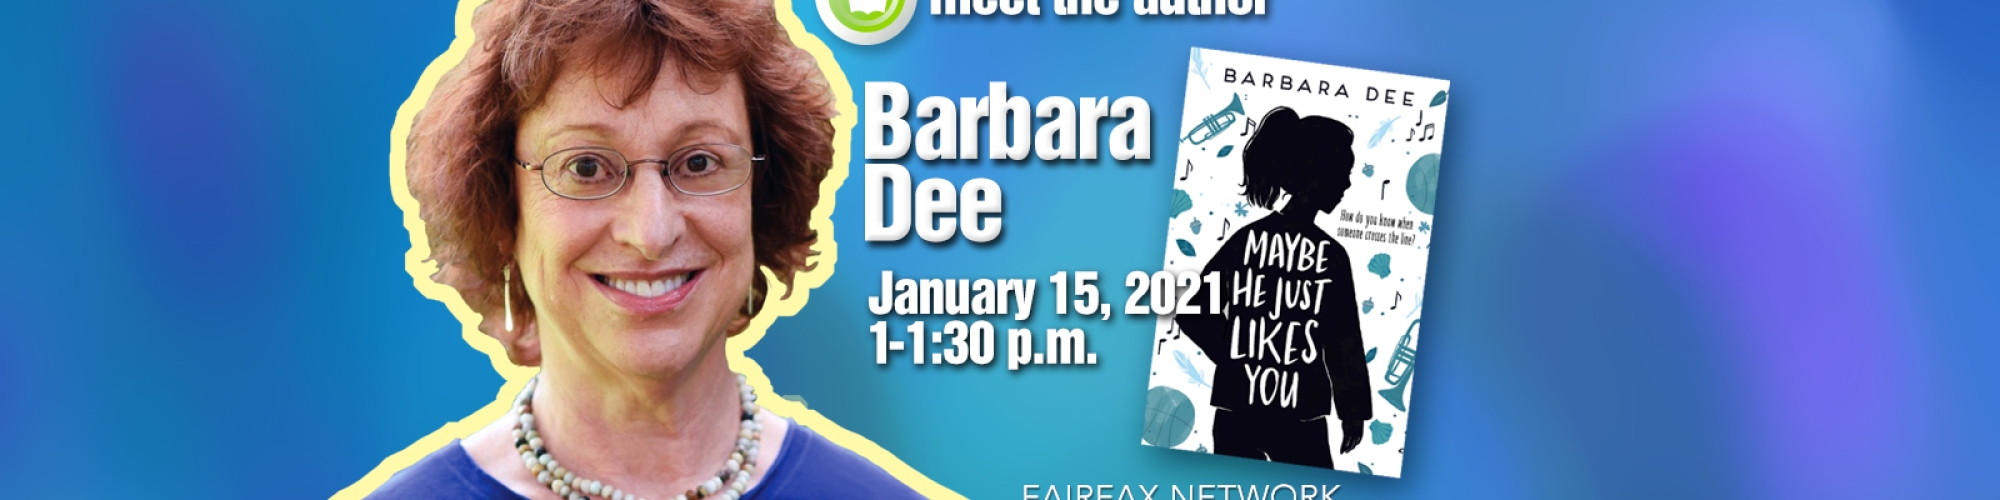 Meet the Author Barbara Dee